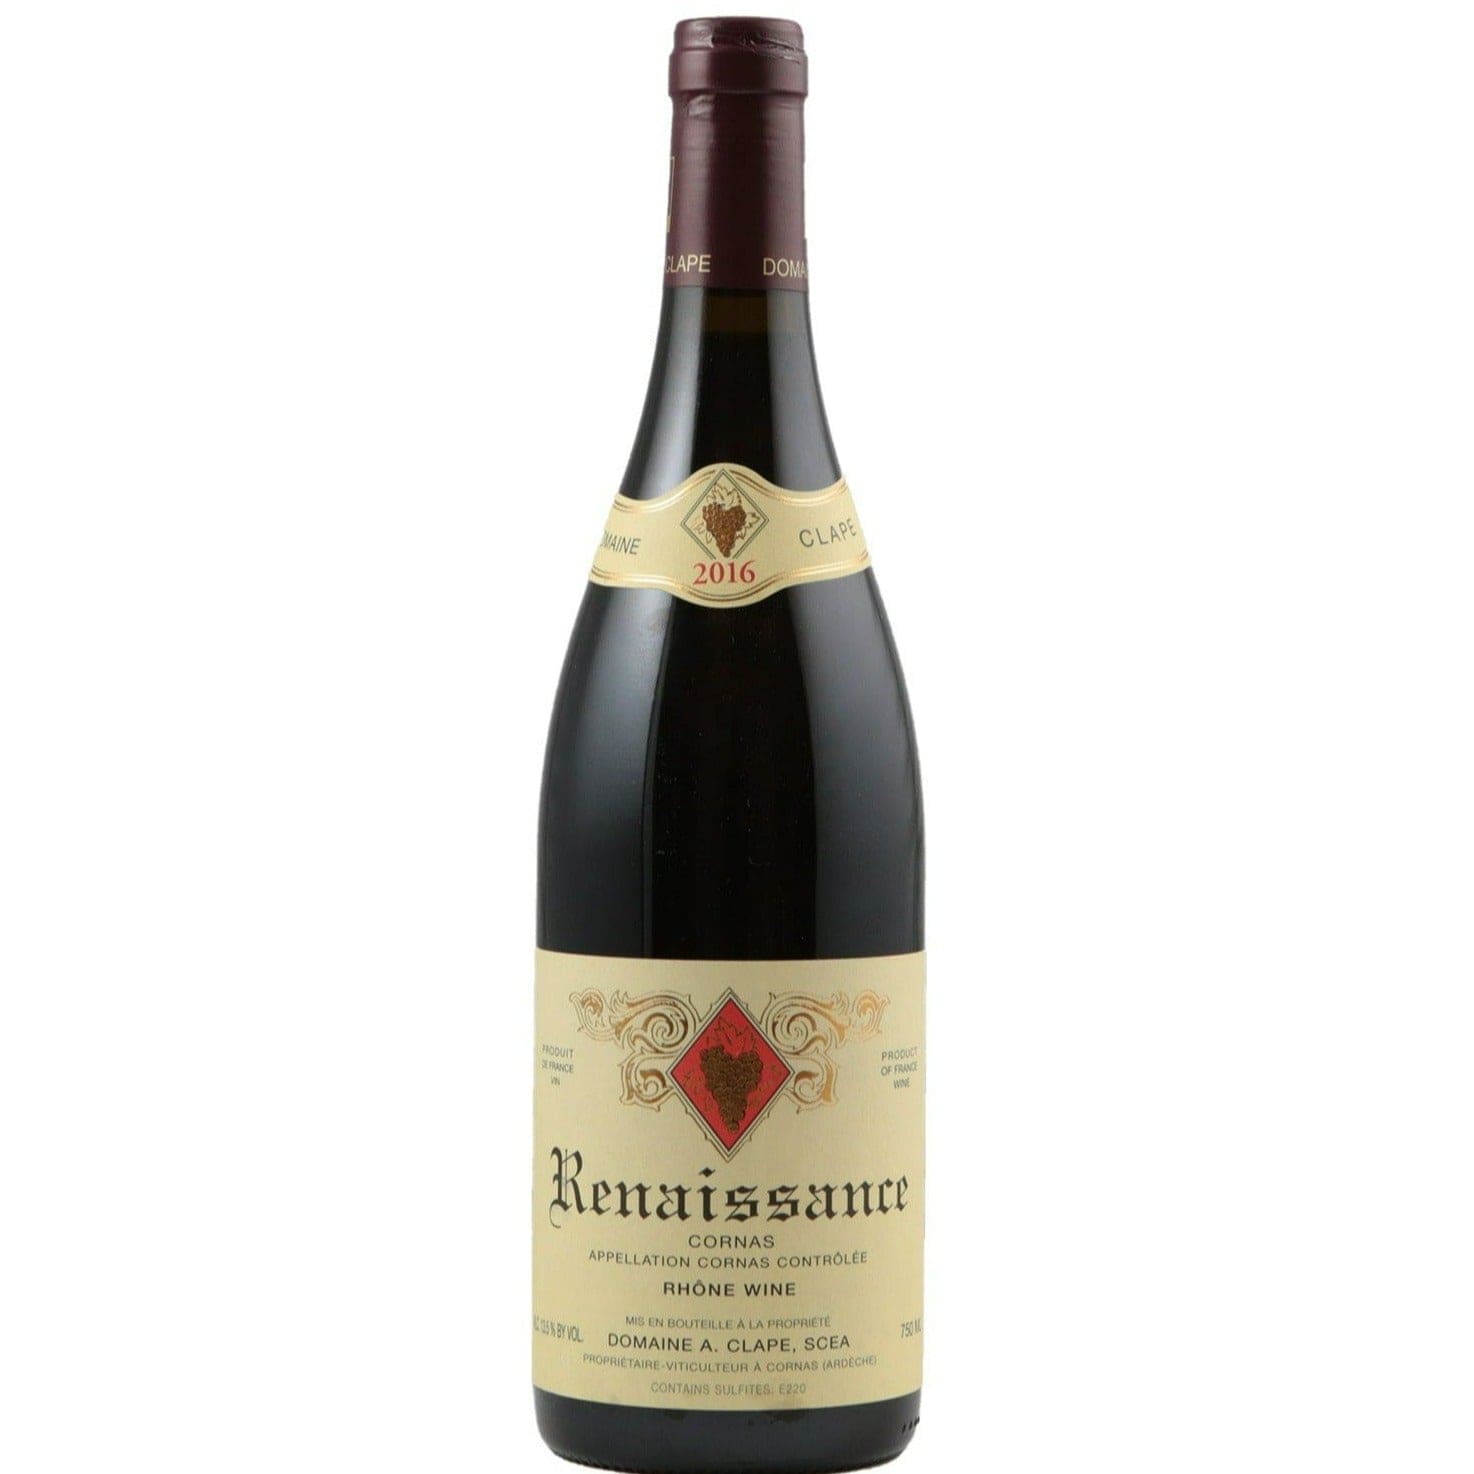 Single bottle of Red wine Dom. Auguste Clape, Renaissance, Cornas, 2016 100% Syrah